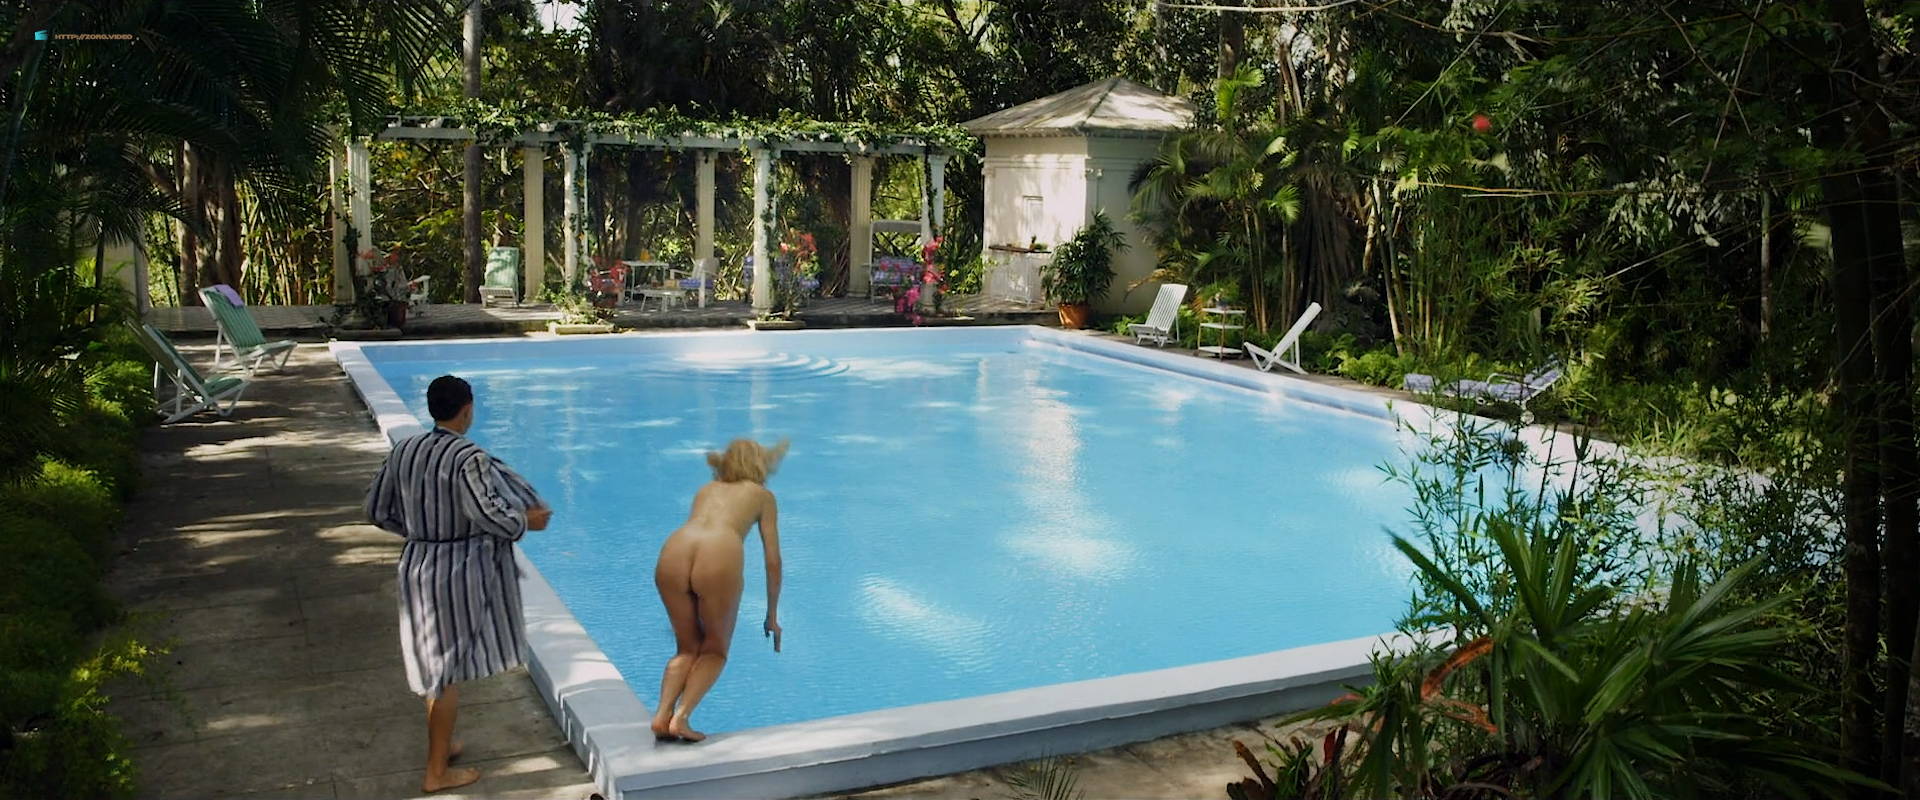 Minka Kelly nude butt Joely Richardson nude and skinny dipping - Papa Hemingway in Cuba (2015) HD 1080p web (3)